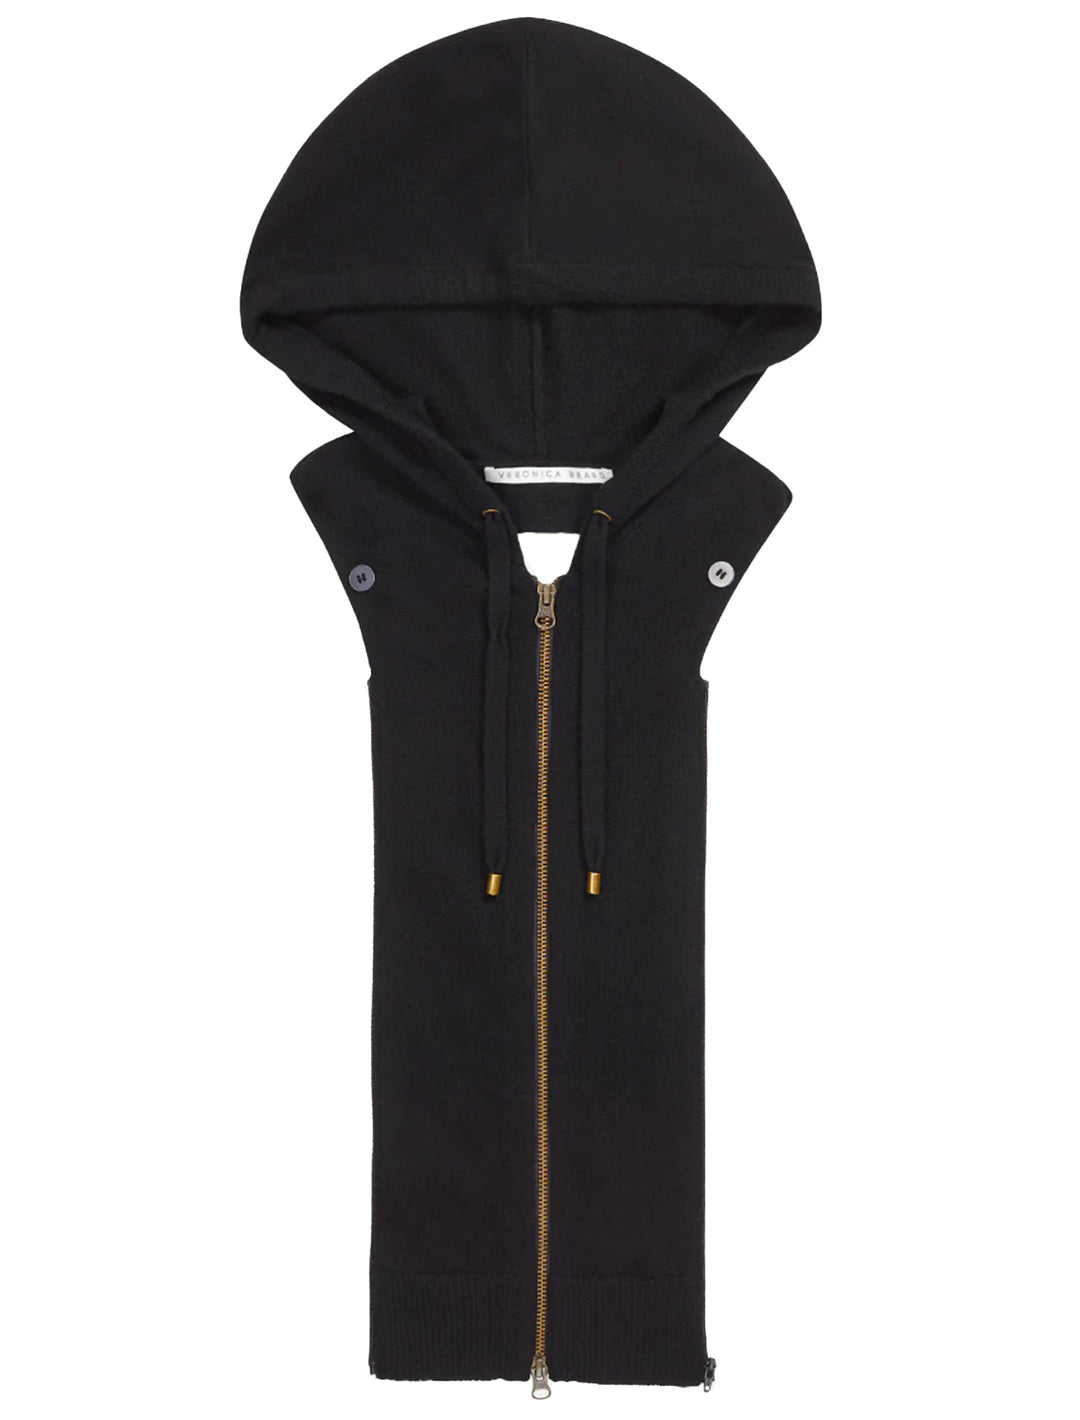 Front view of Veronica Beard's merino + cashmere hoodie dickey in black.